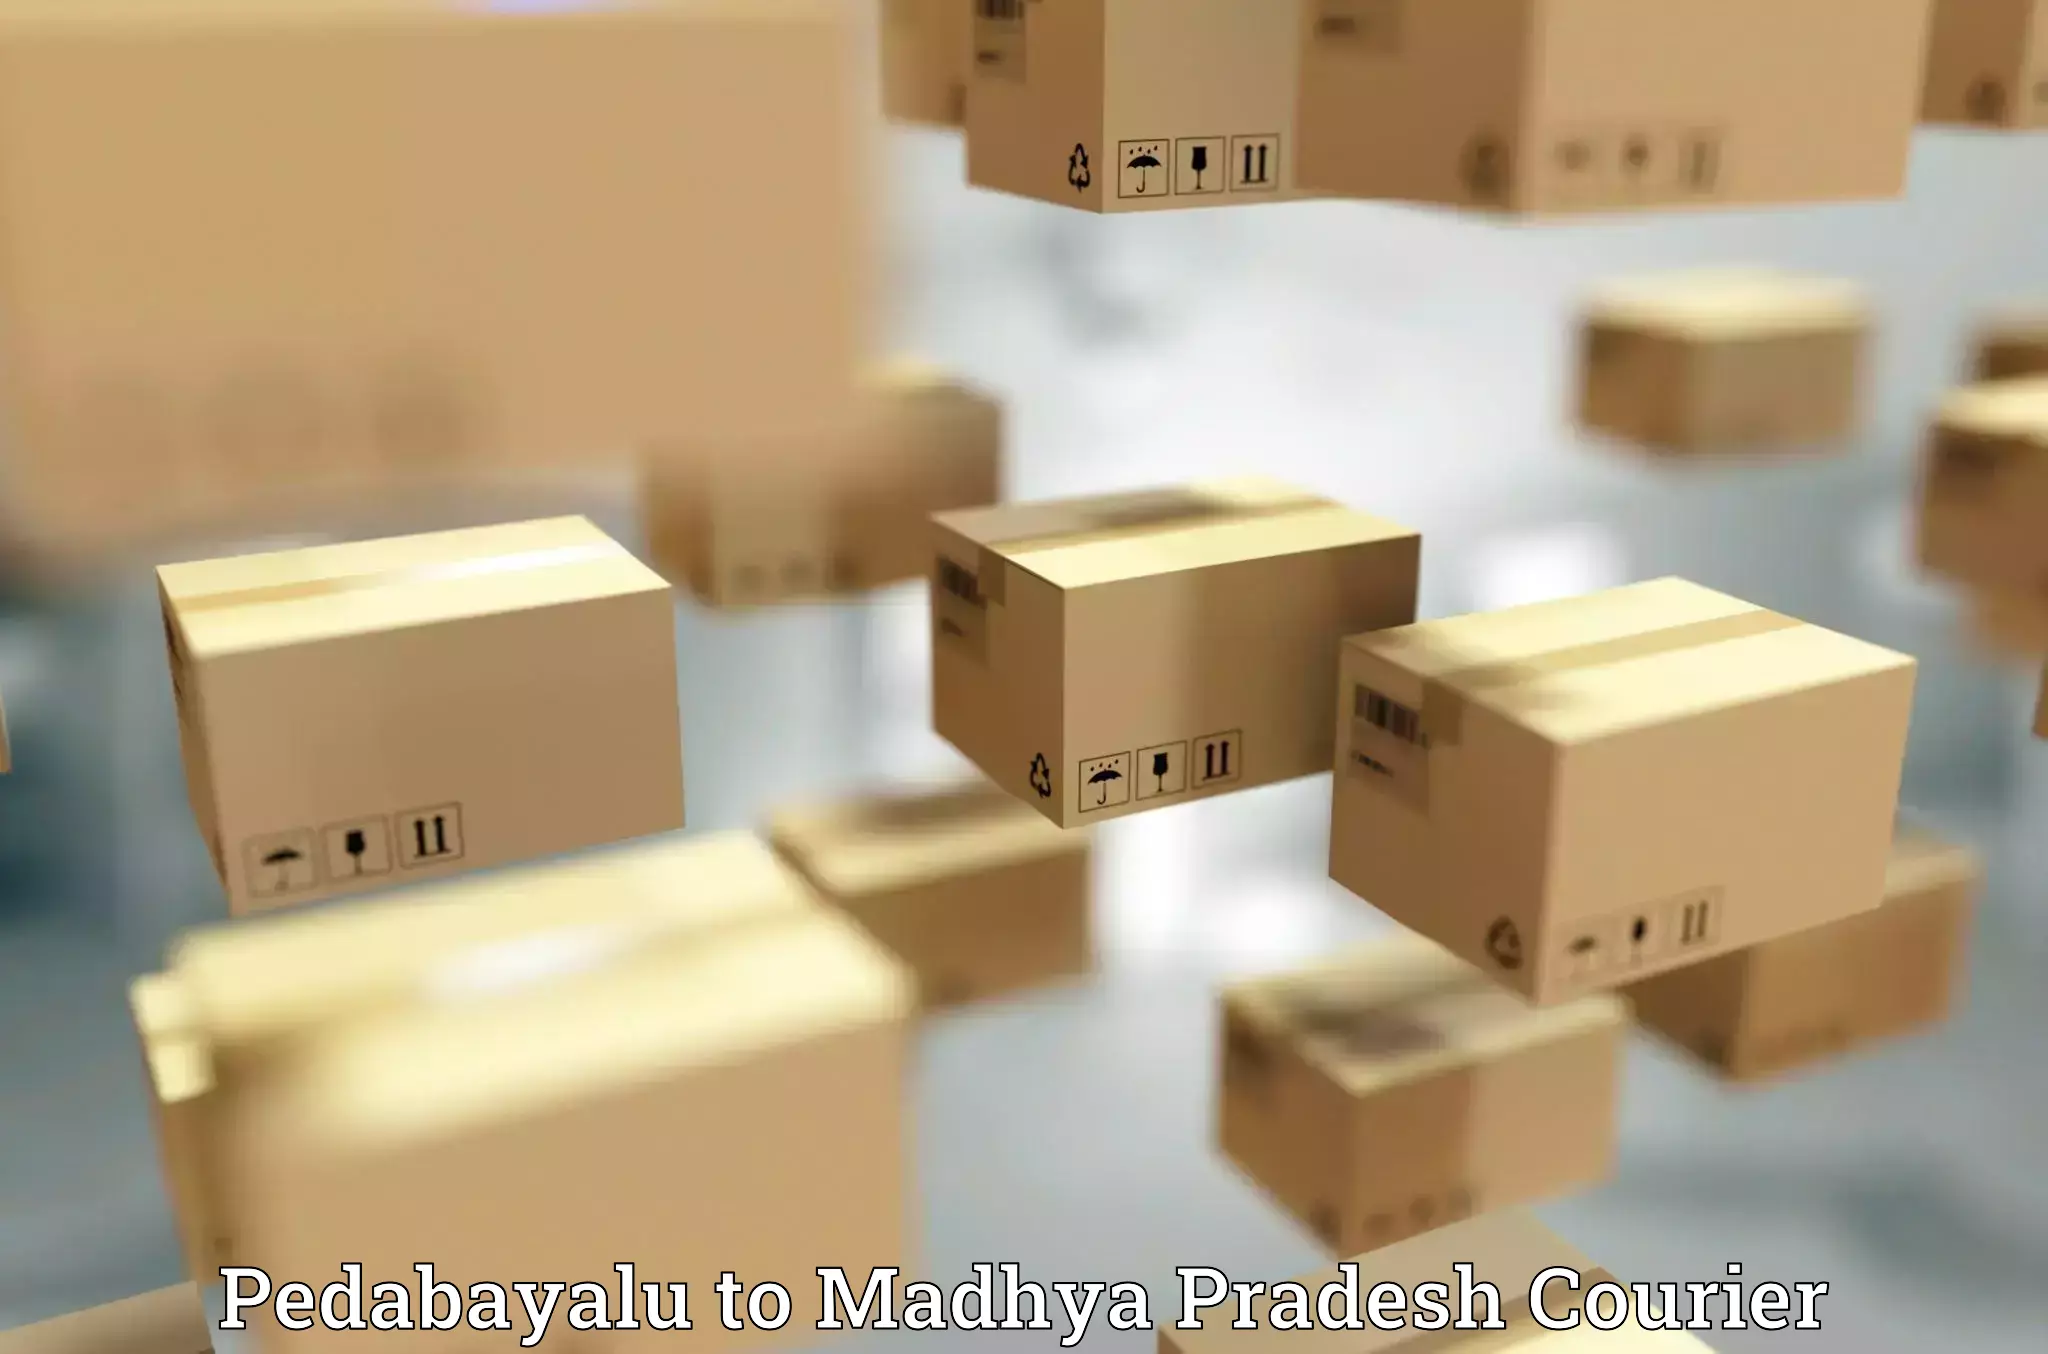 Courier app Pedabayalu to Madhya Pradesh